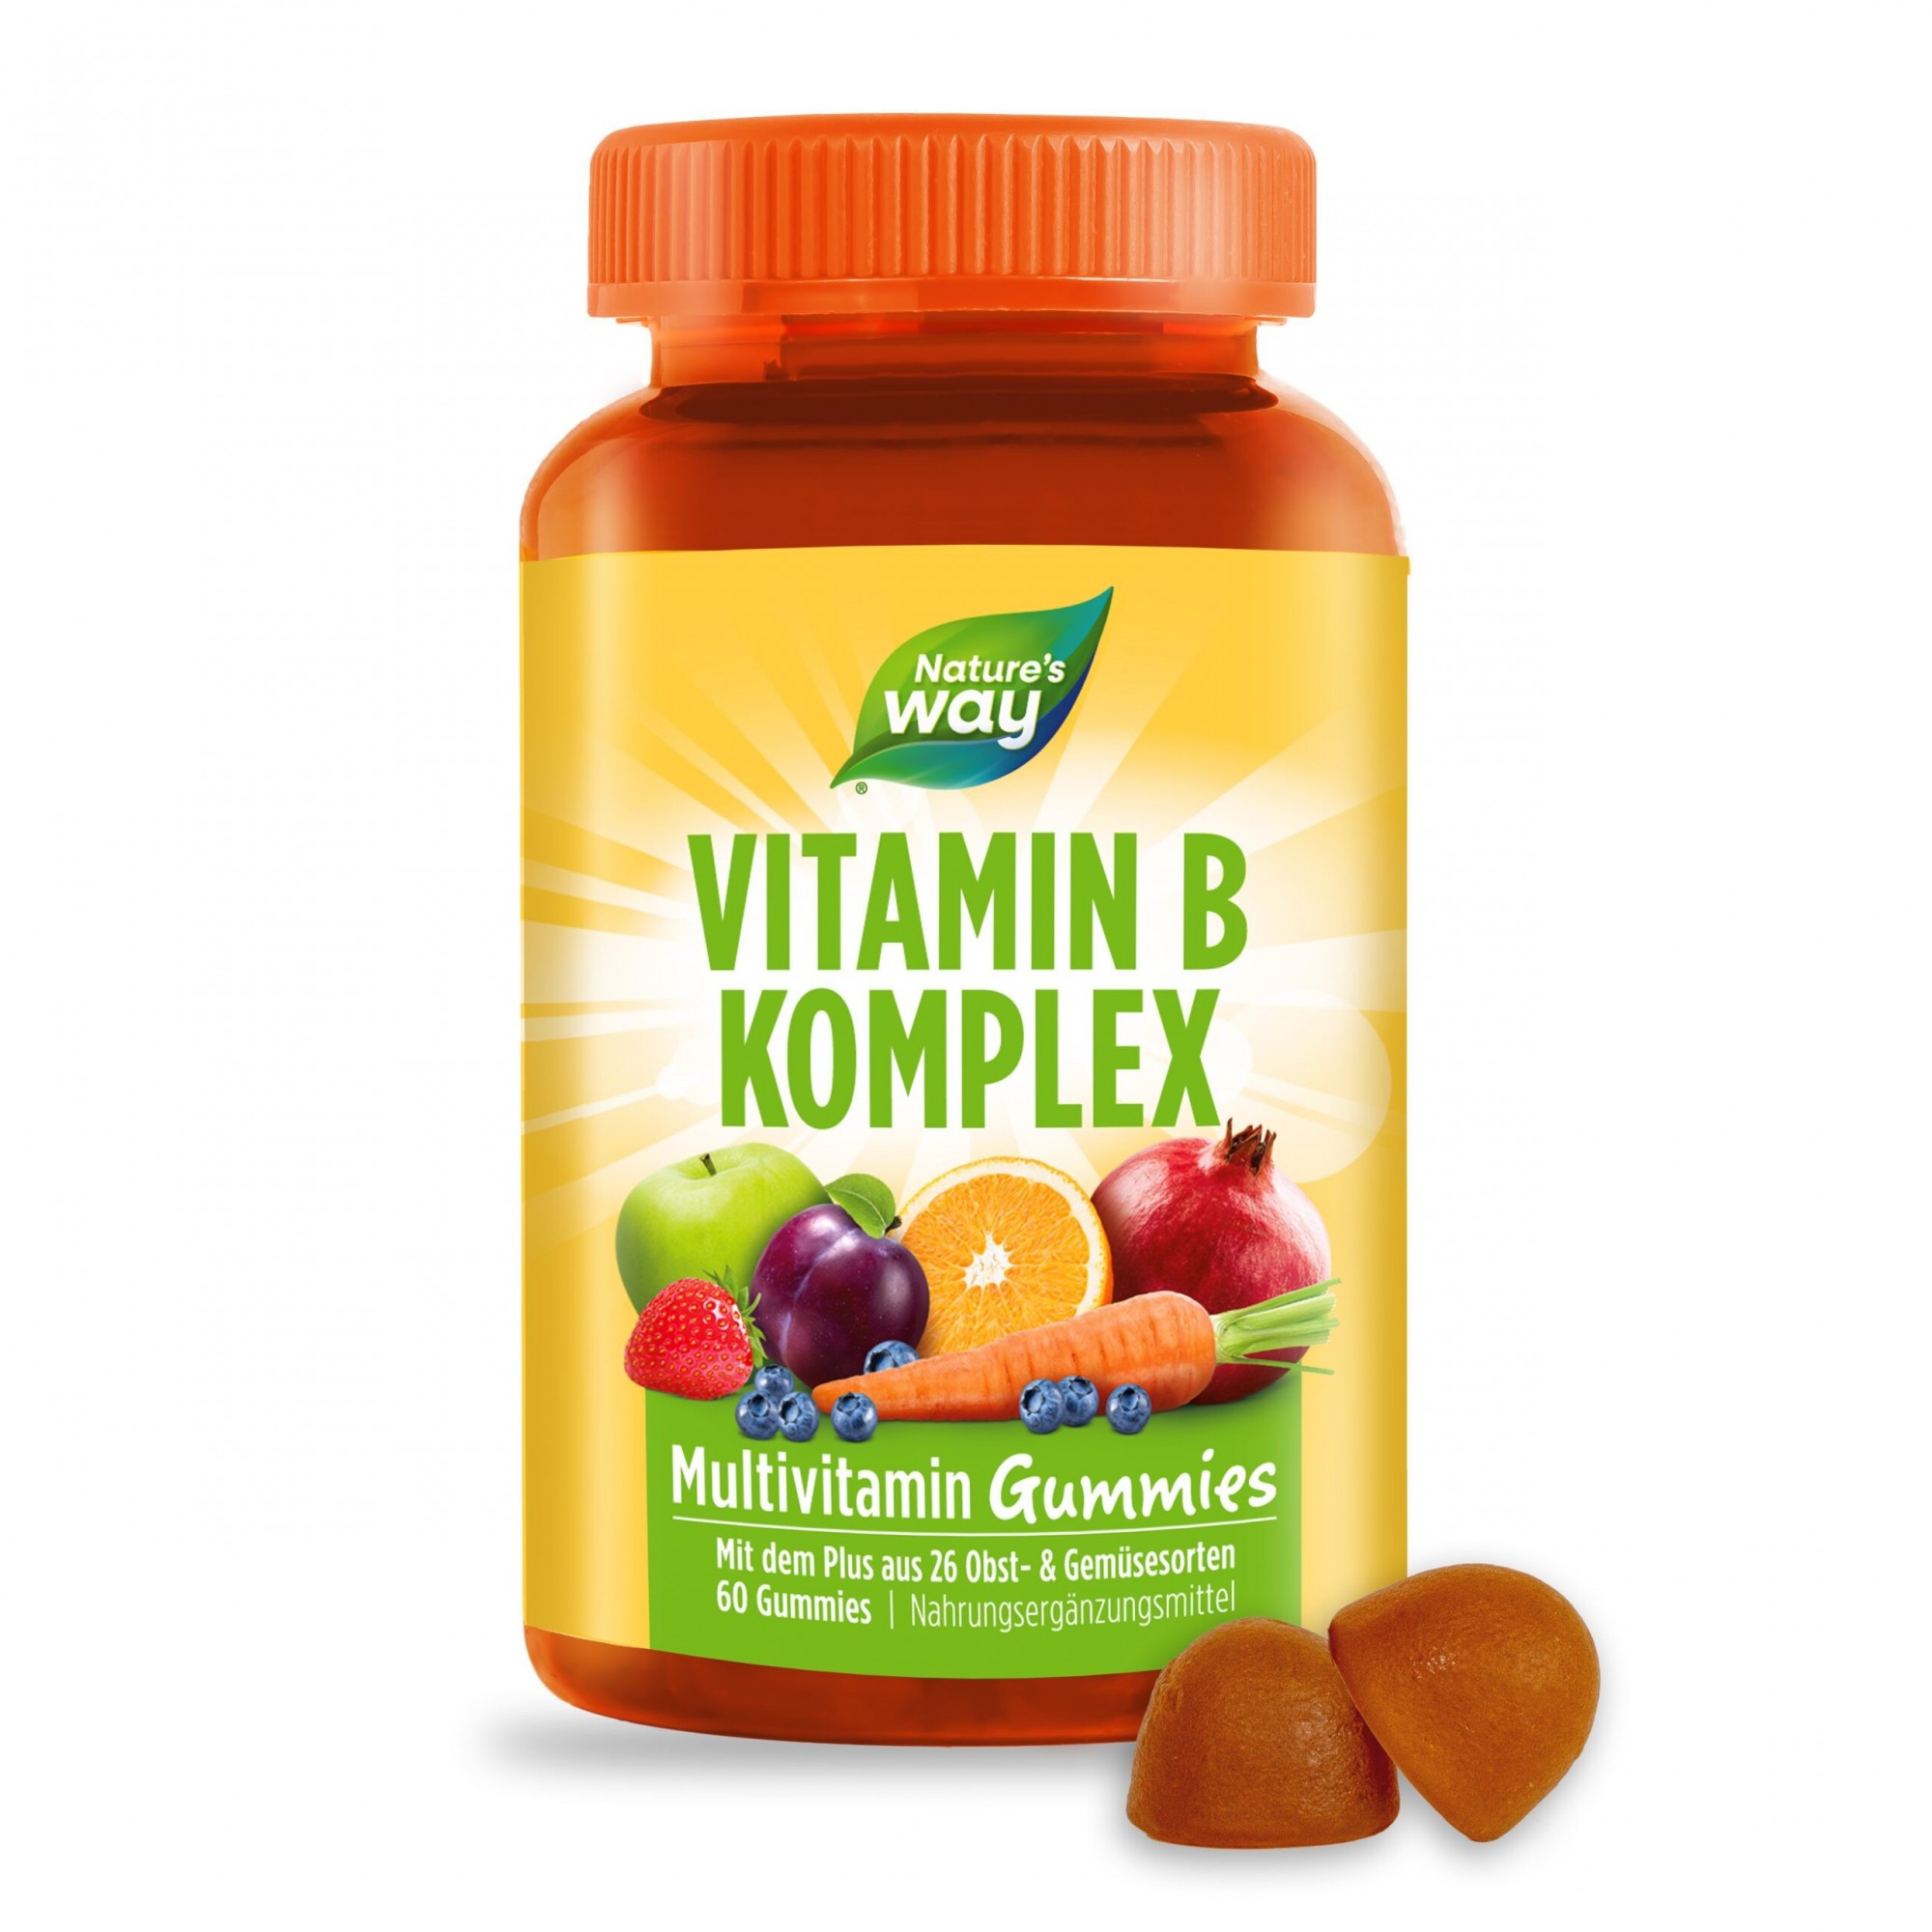 Vitamin B Komplex Multivitamin Gummies kaufen